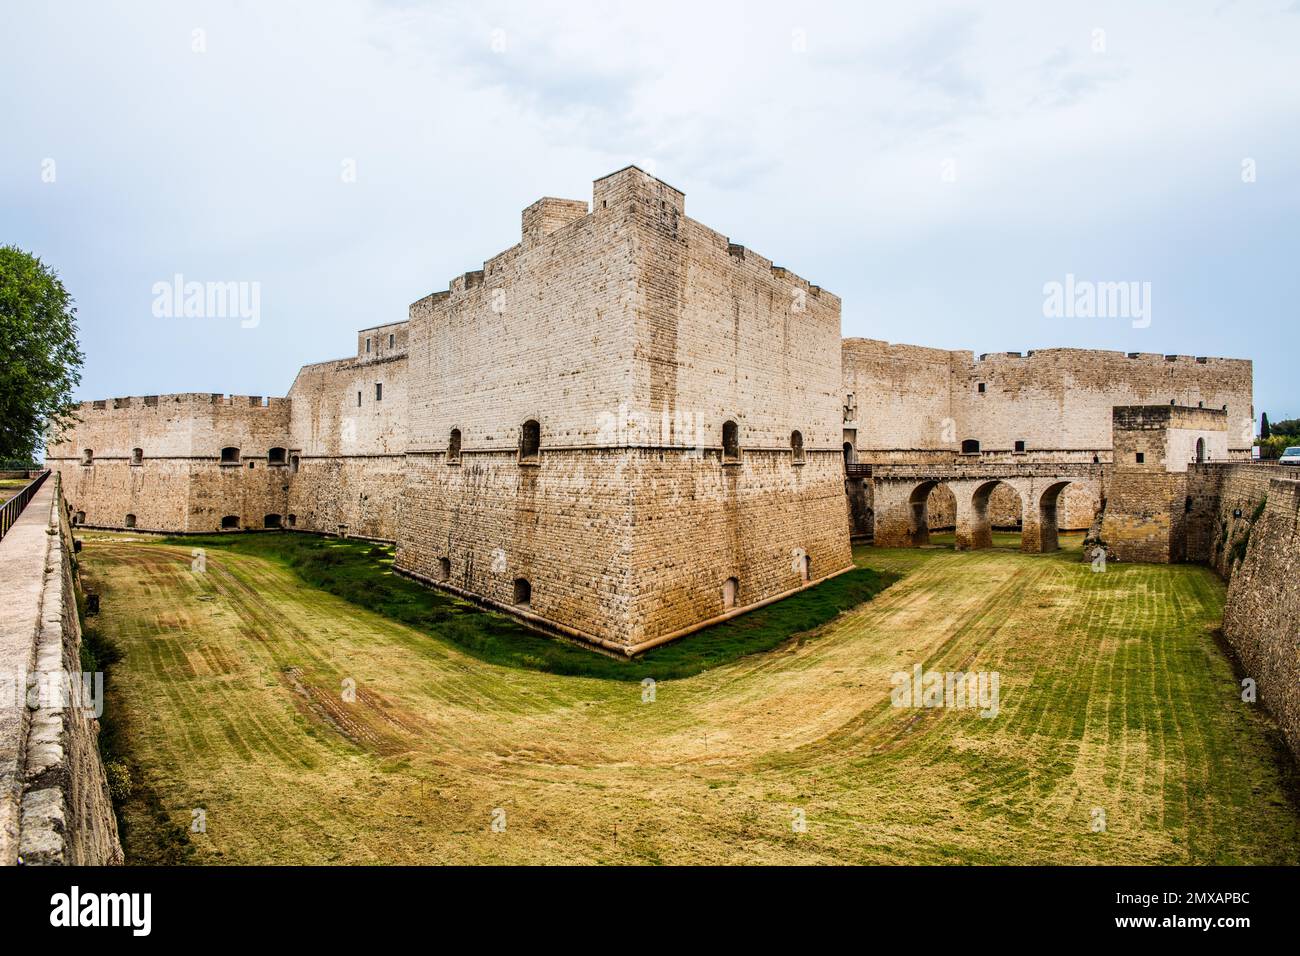 Barletta, Apulia, Barletta, Apulia, Italie, Forteresse Staufer datant du 10th siècle Banque D'Images